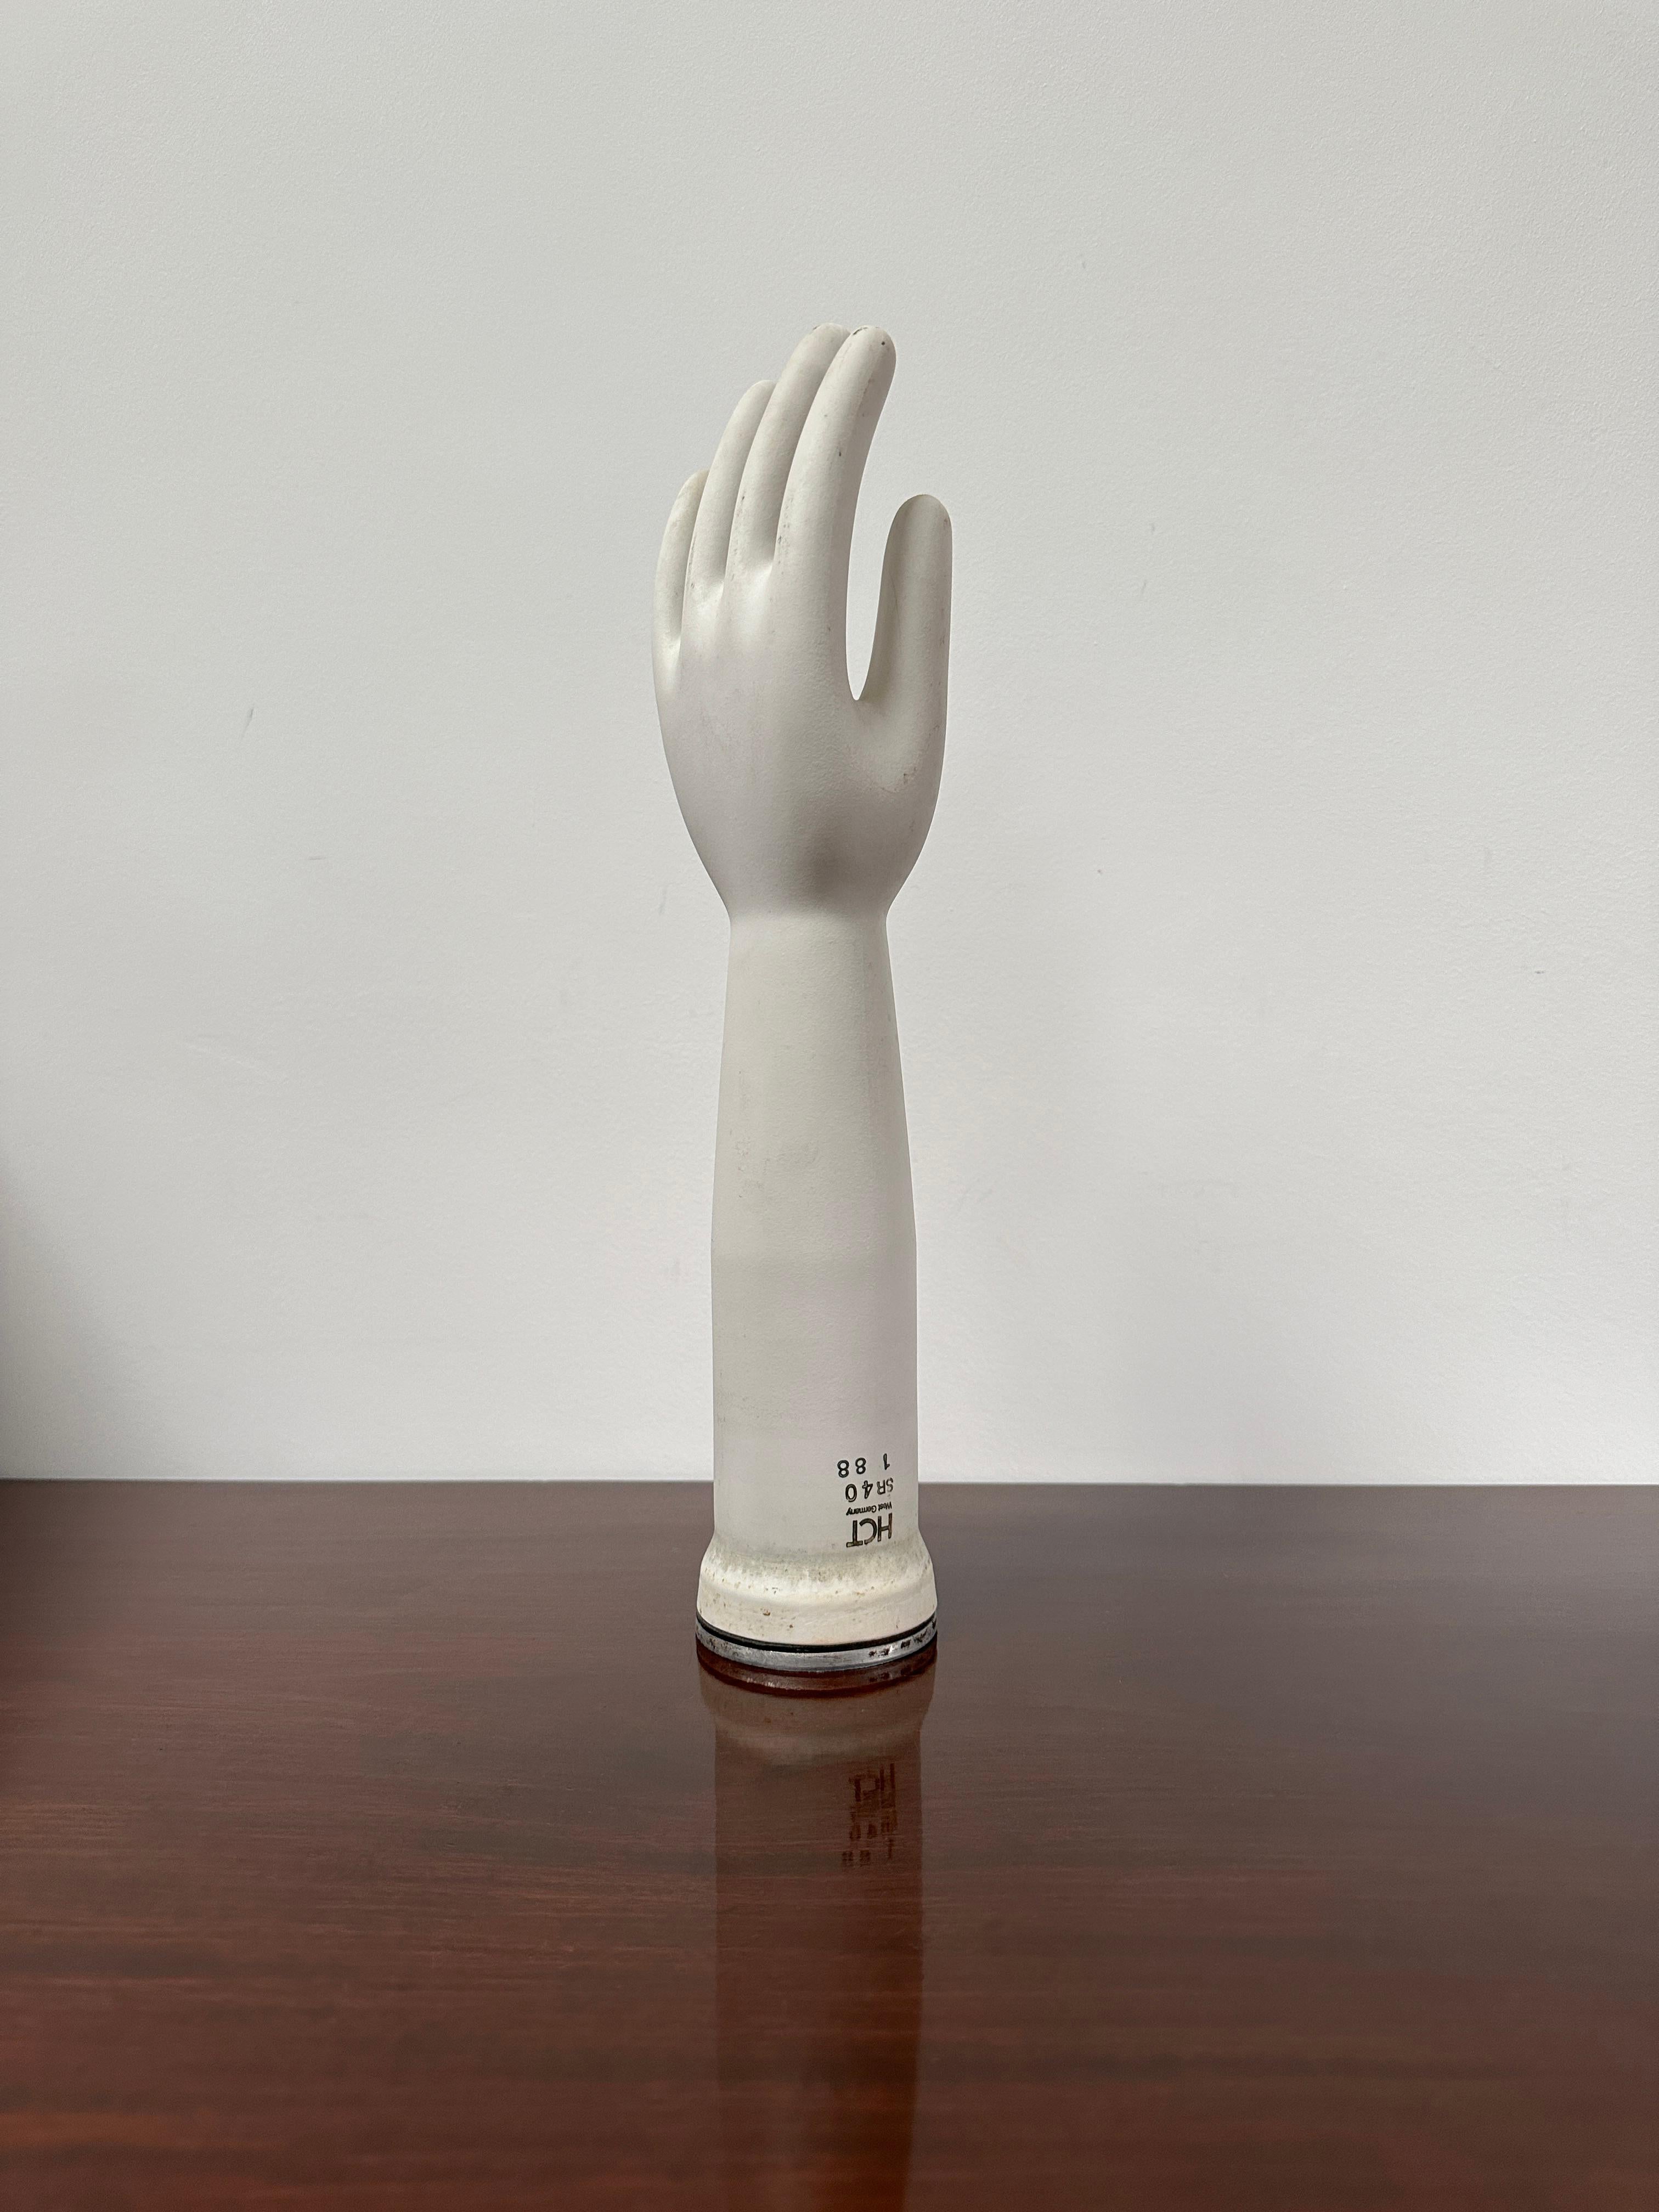 German Pair Vintage Antique Industrial Decorative Ceramic Glove Mould Hand Sculpture